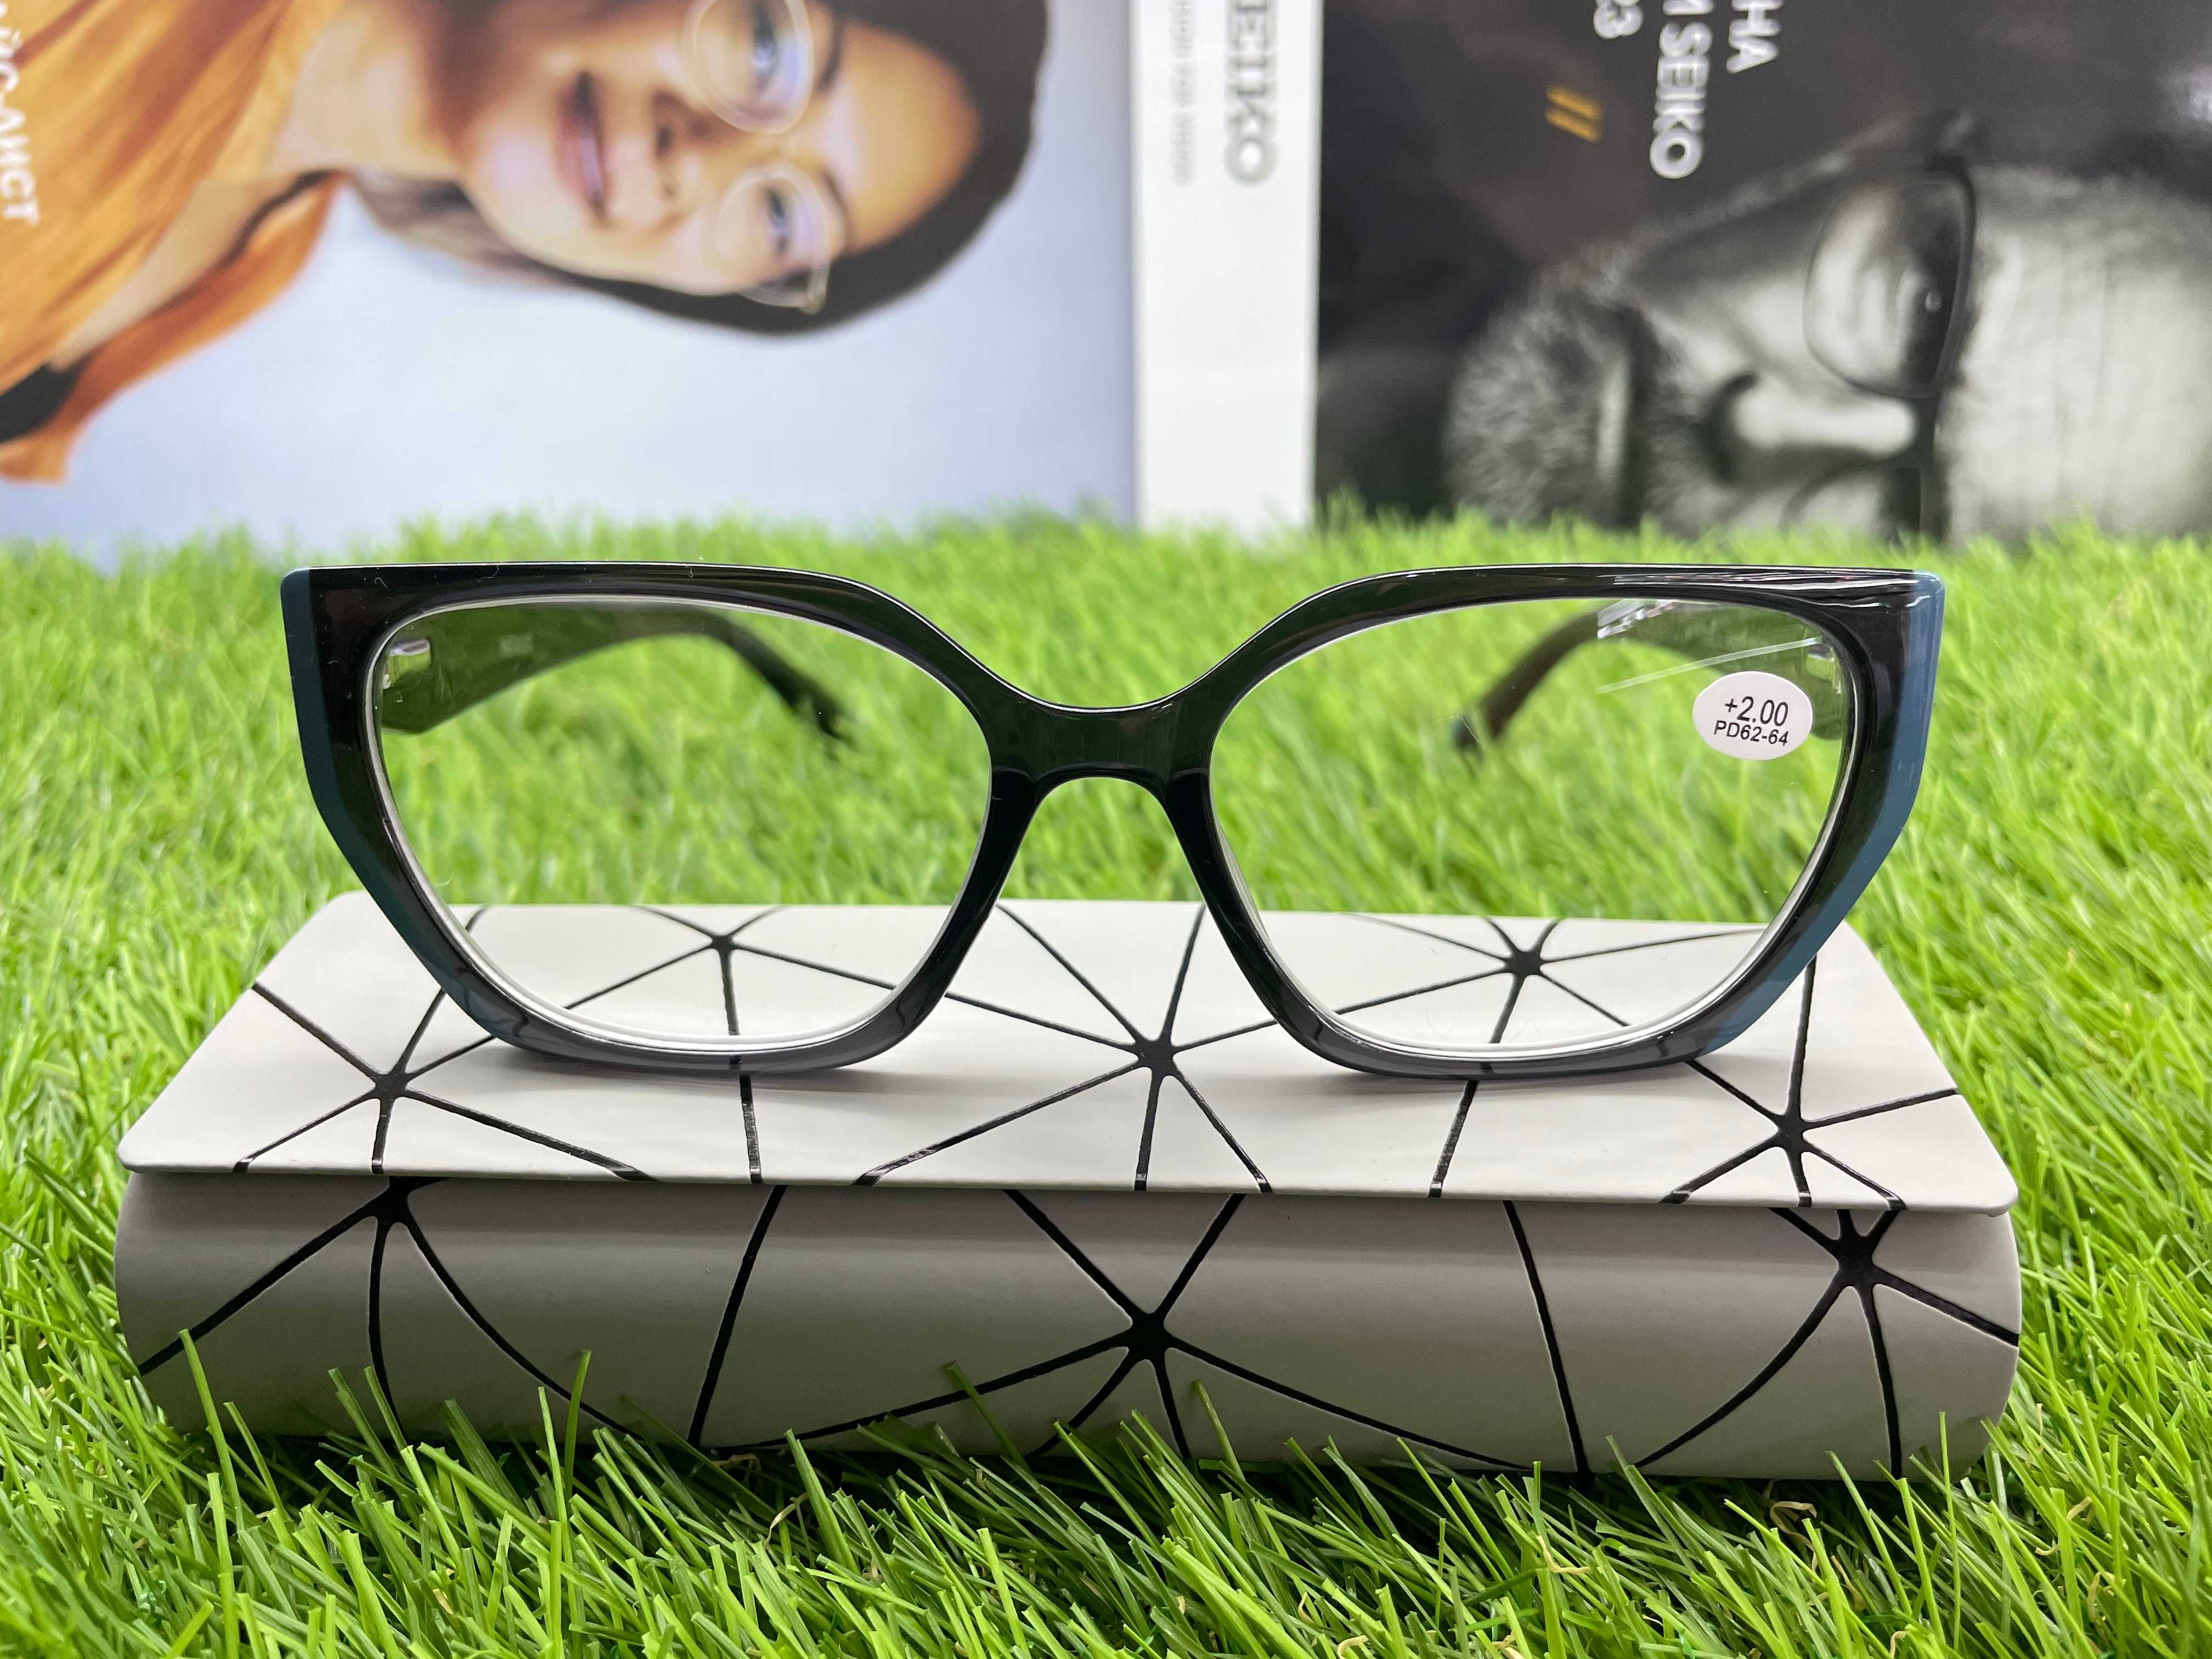 Жіночі окуляри/Женские очки/Очкт для зрения/Окуляри для зору